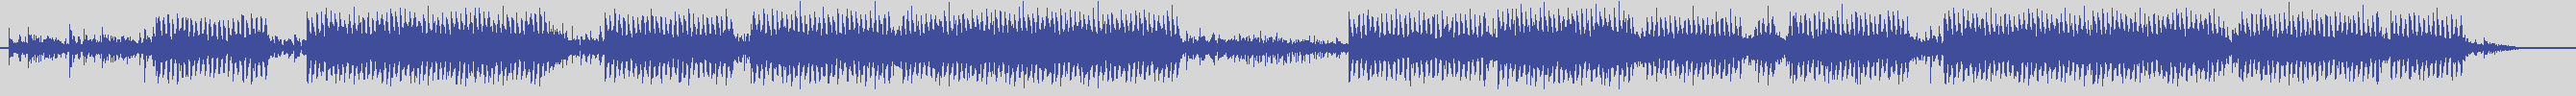 noclouds_chillout [NOC069] Kanto - Cosmic Gate [Original Mix] audio wave form